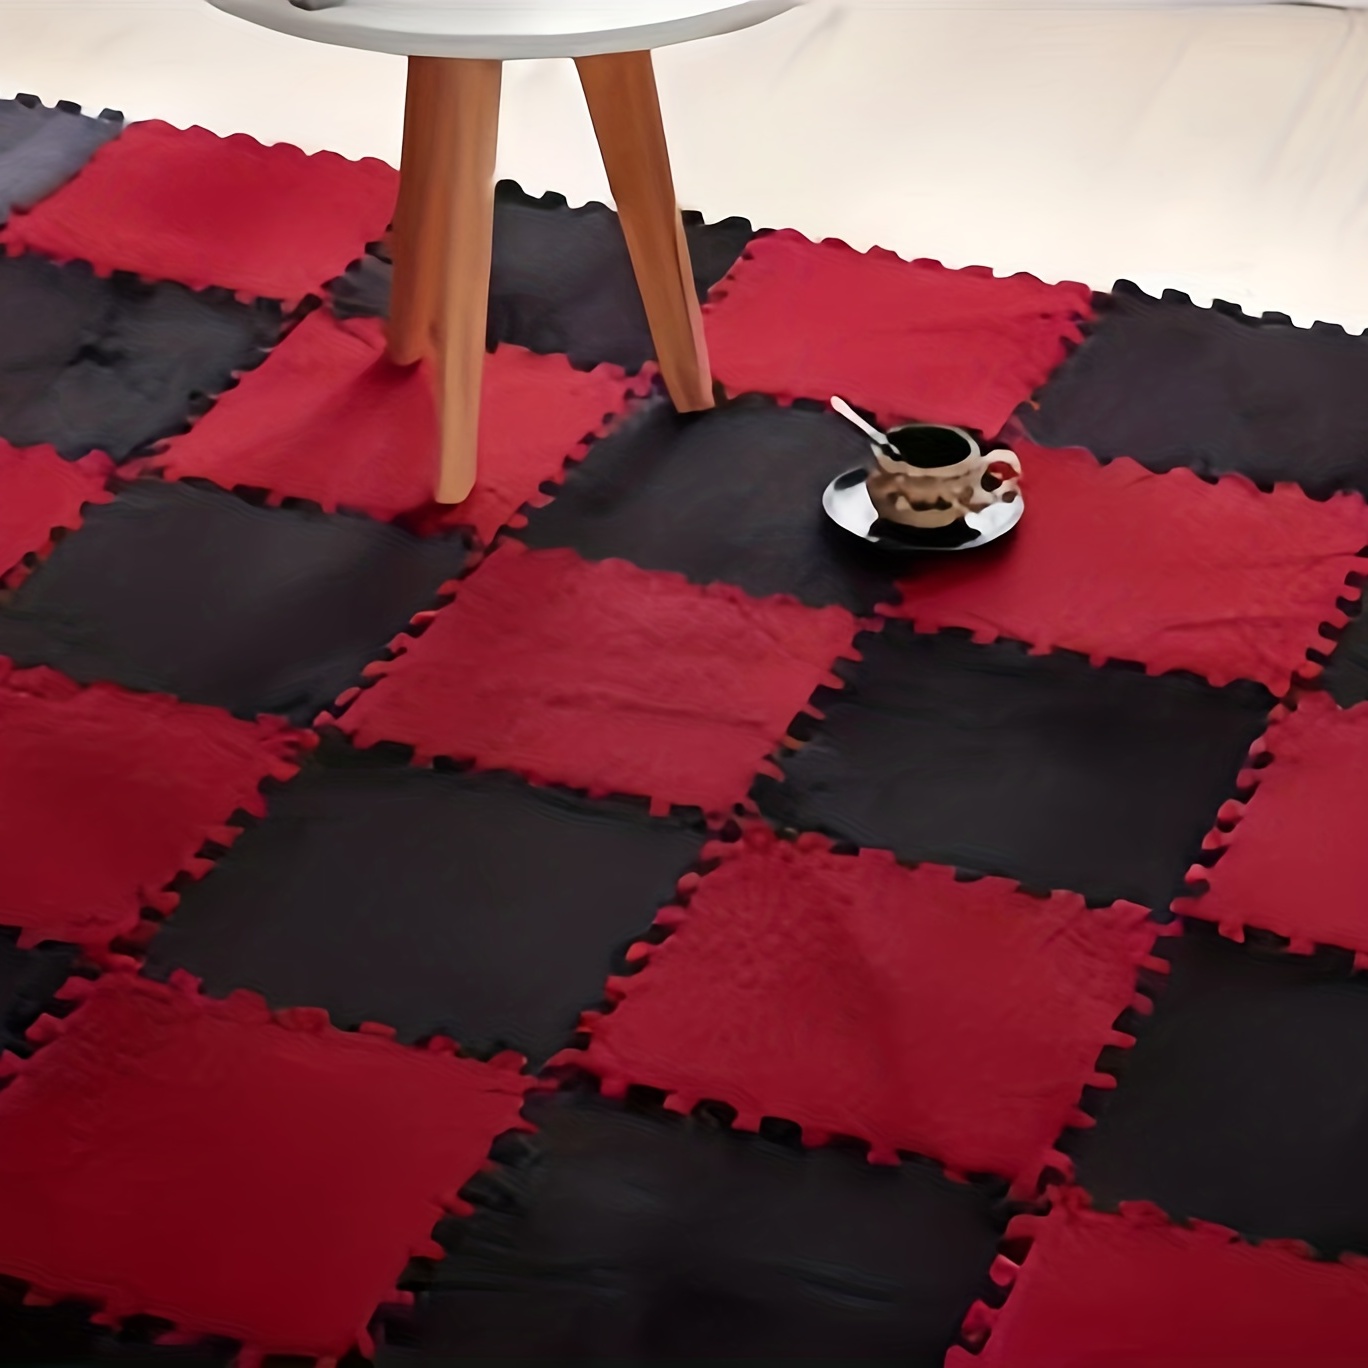 Foam Tiles Interlocking Puzzle Foam Floor Mats Baby Play Mat - Temu